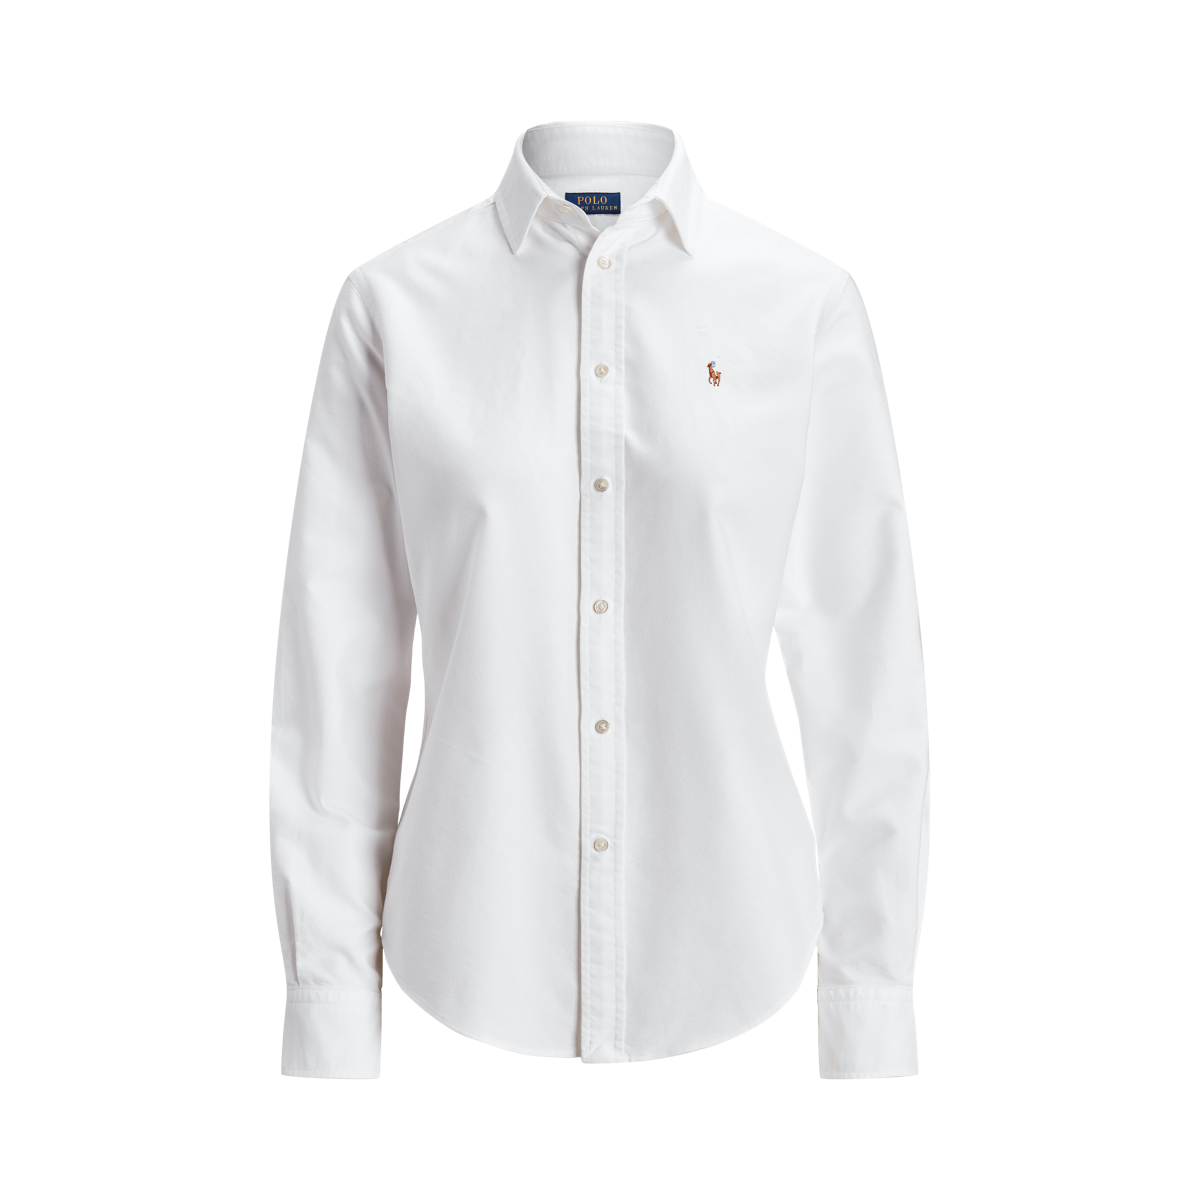 Polo Ralph Lauren Women's Classic Fit Oxford Shirt - White - Size 4